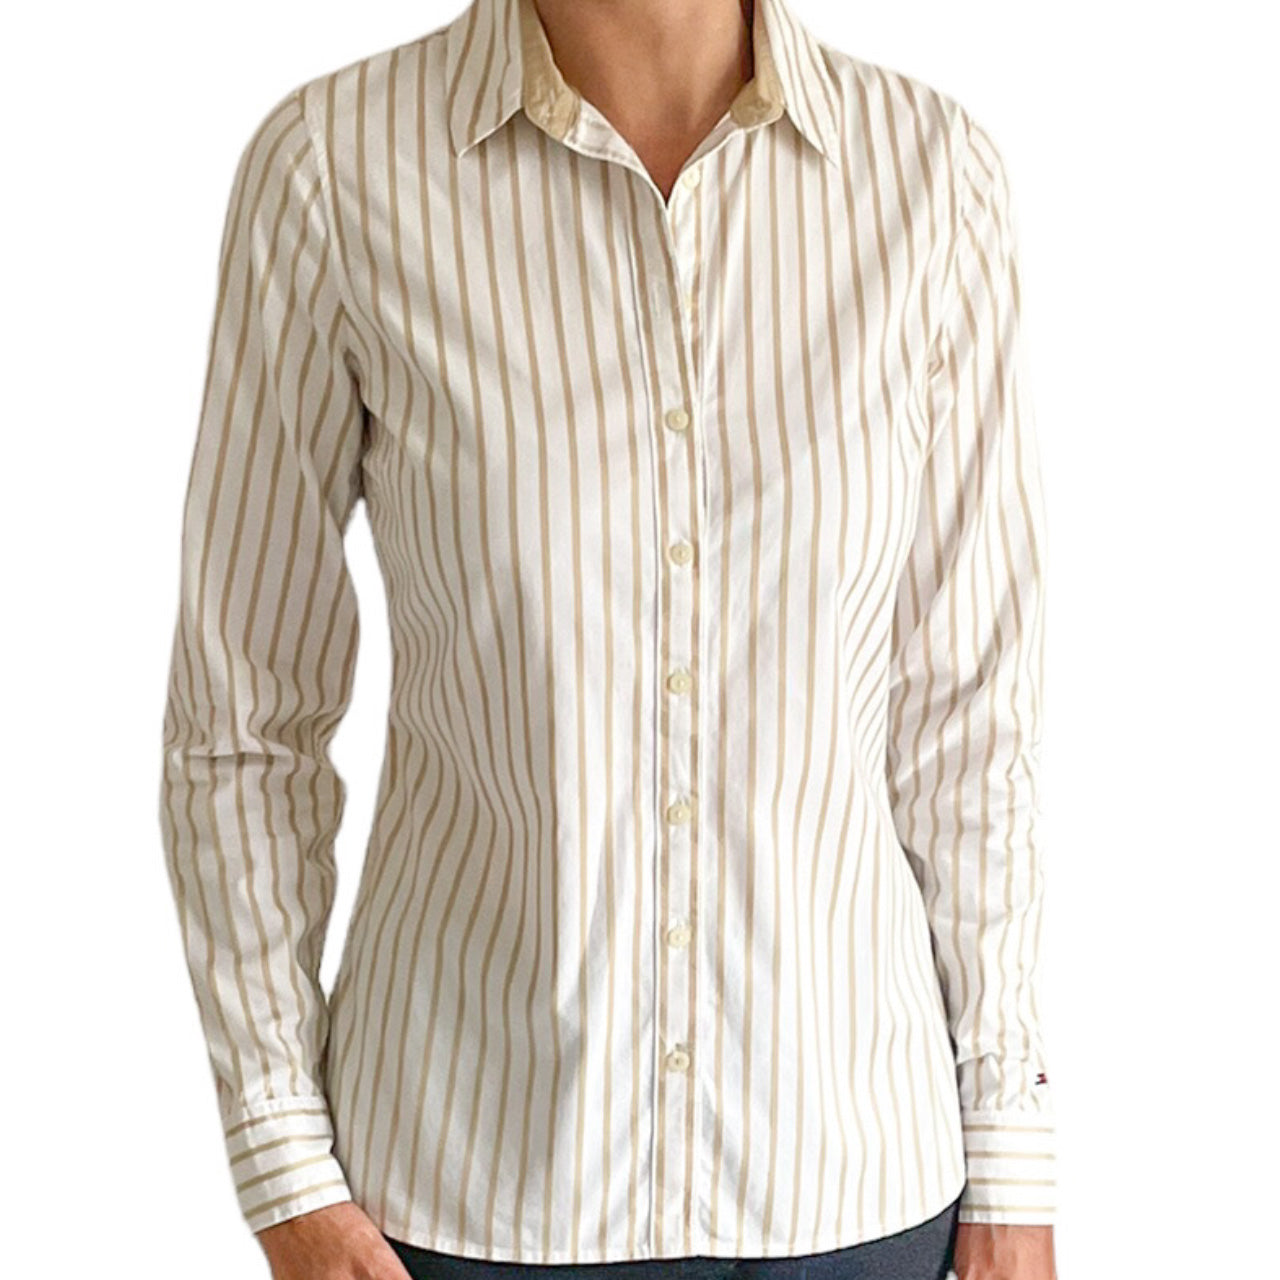 Tommy Hilfiger Striped Shirt